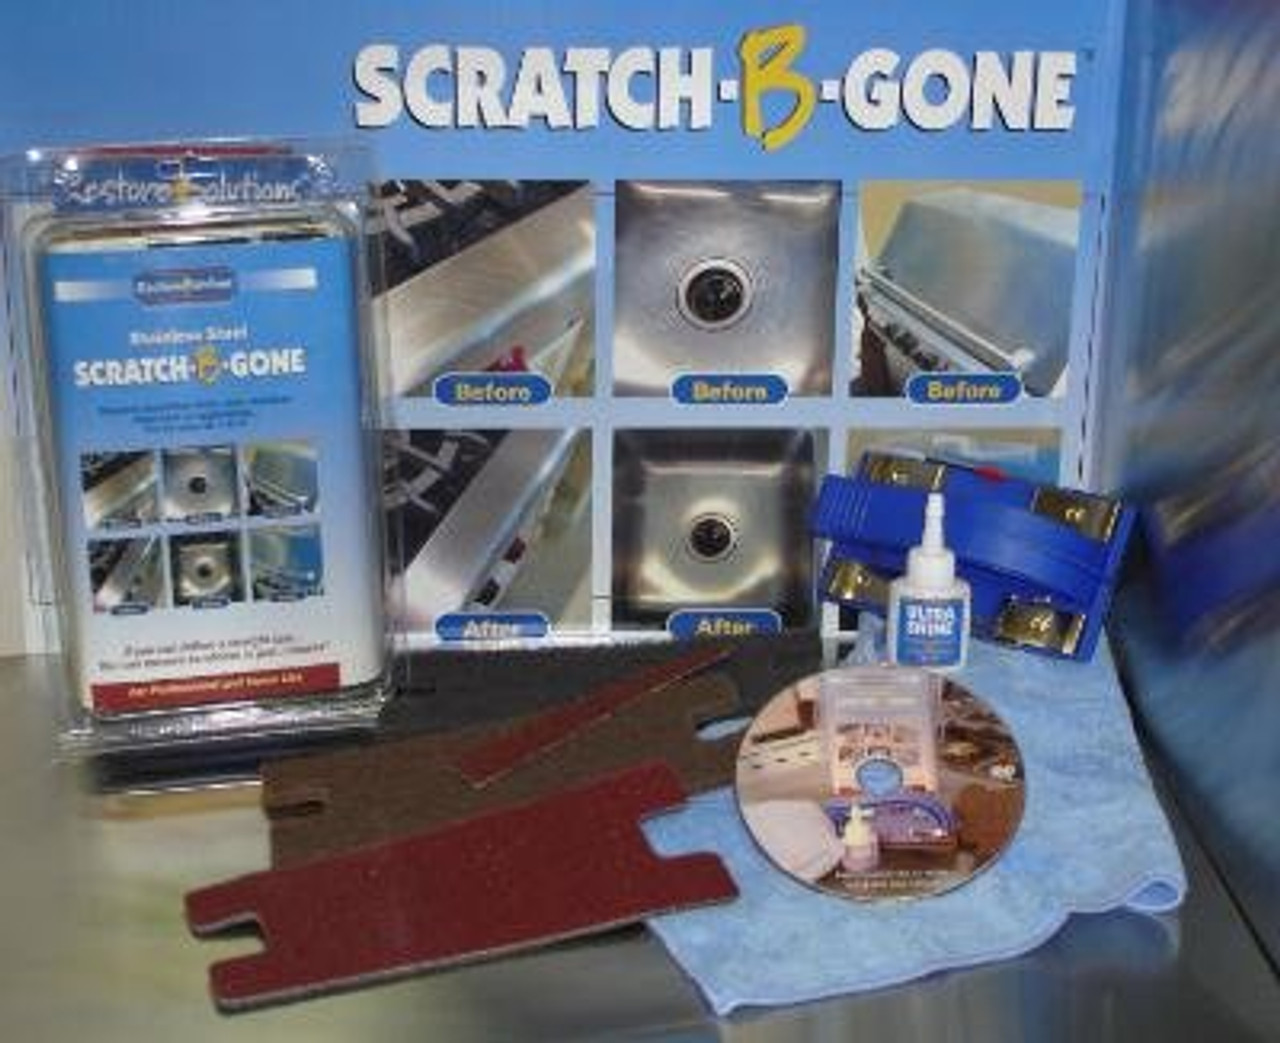 Scratch-B-Gone Stainless Steel Scratch Repair Kit SCRATCHBGONE